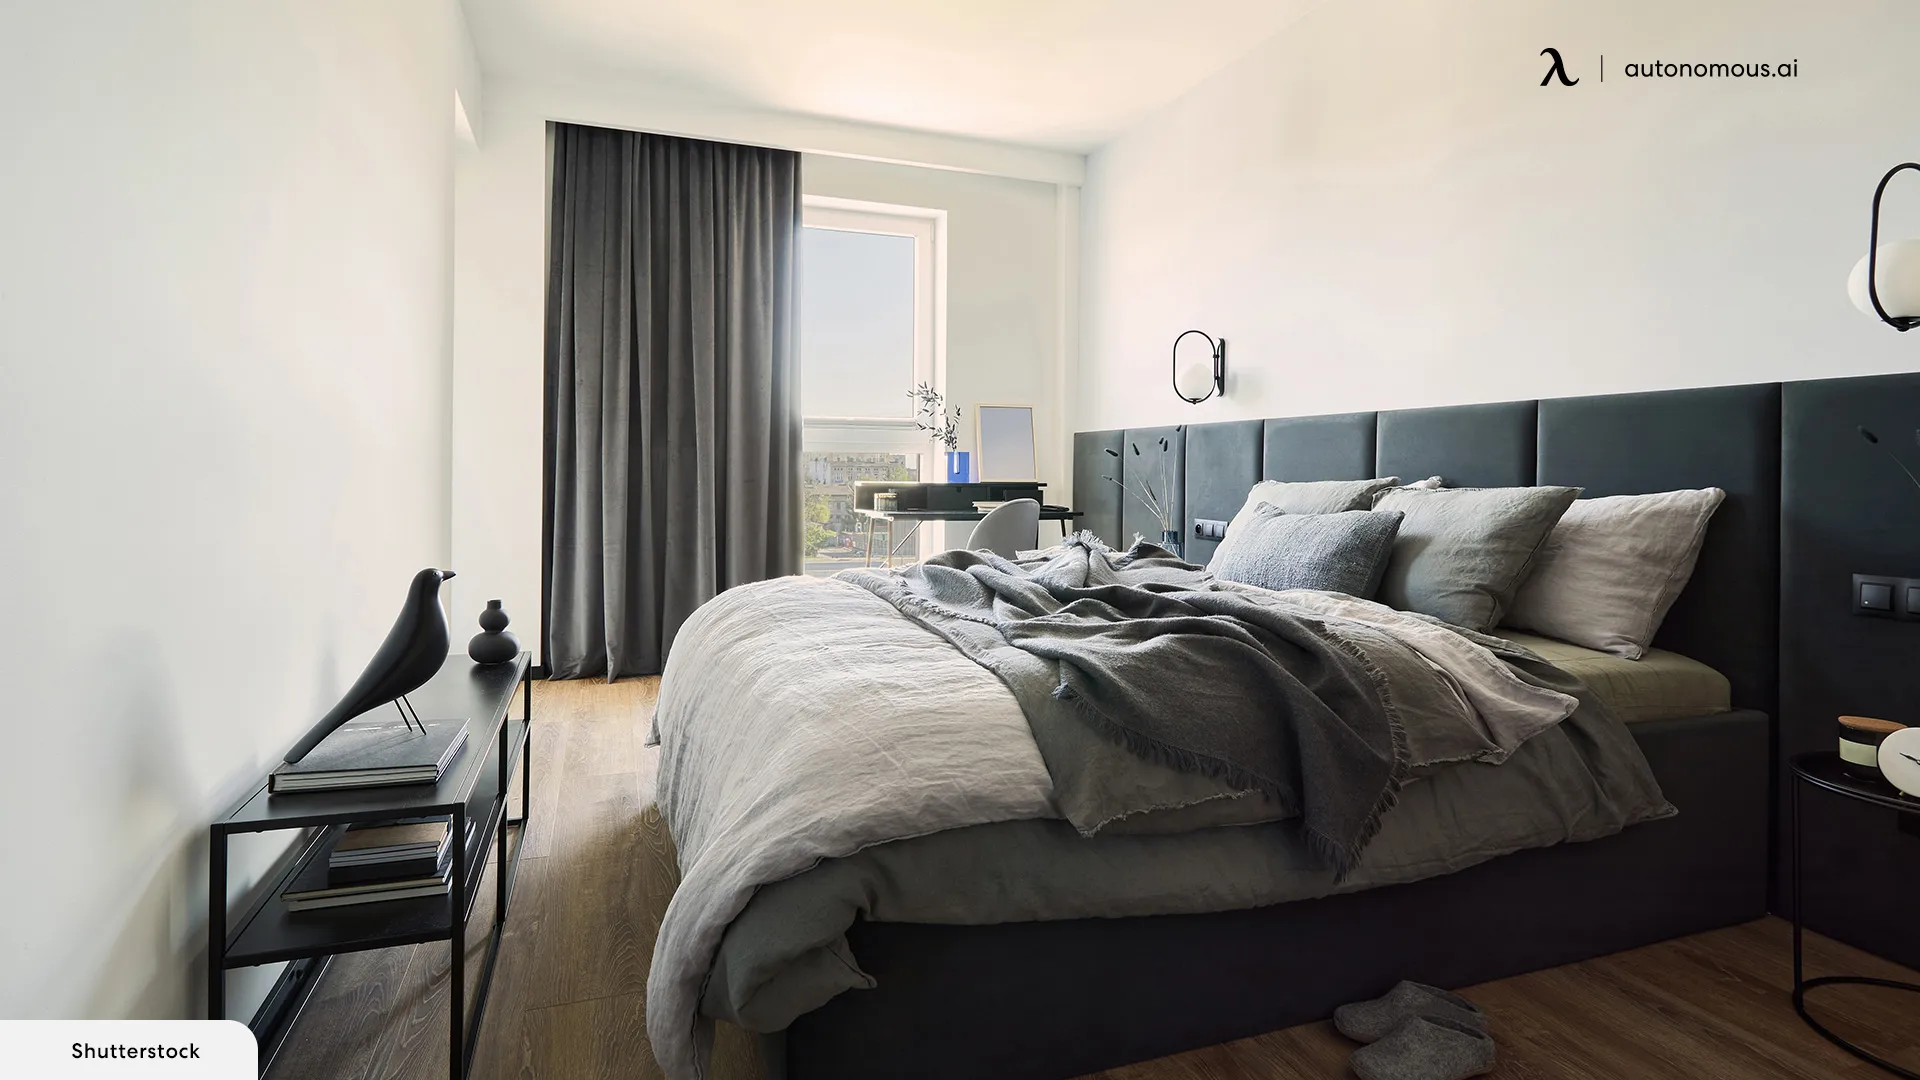 NYC Bedroom Office - Home office bedroom design ideas